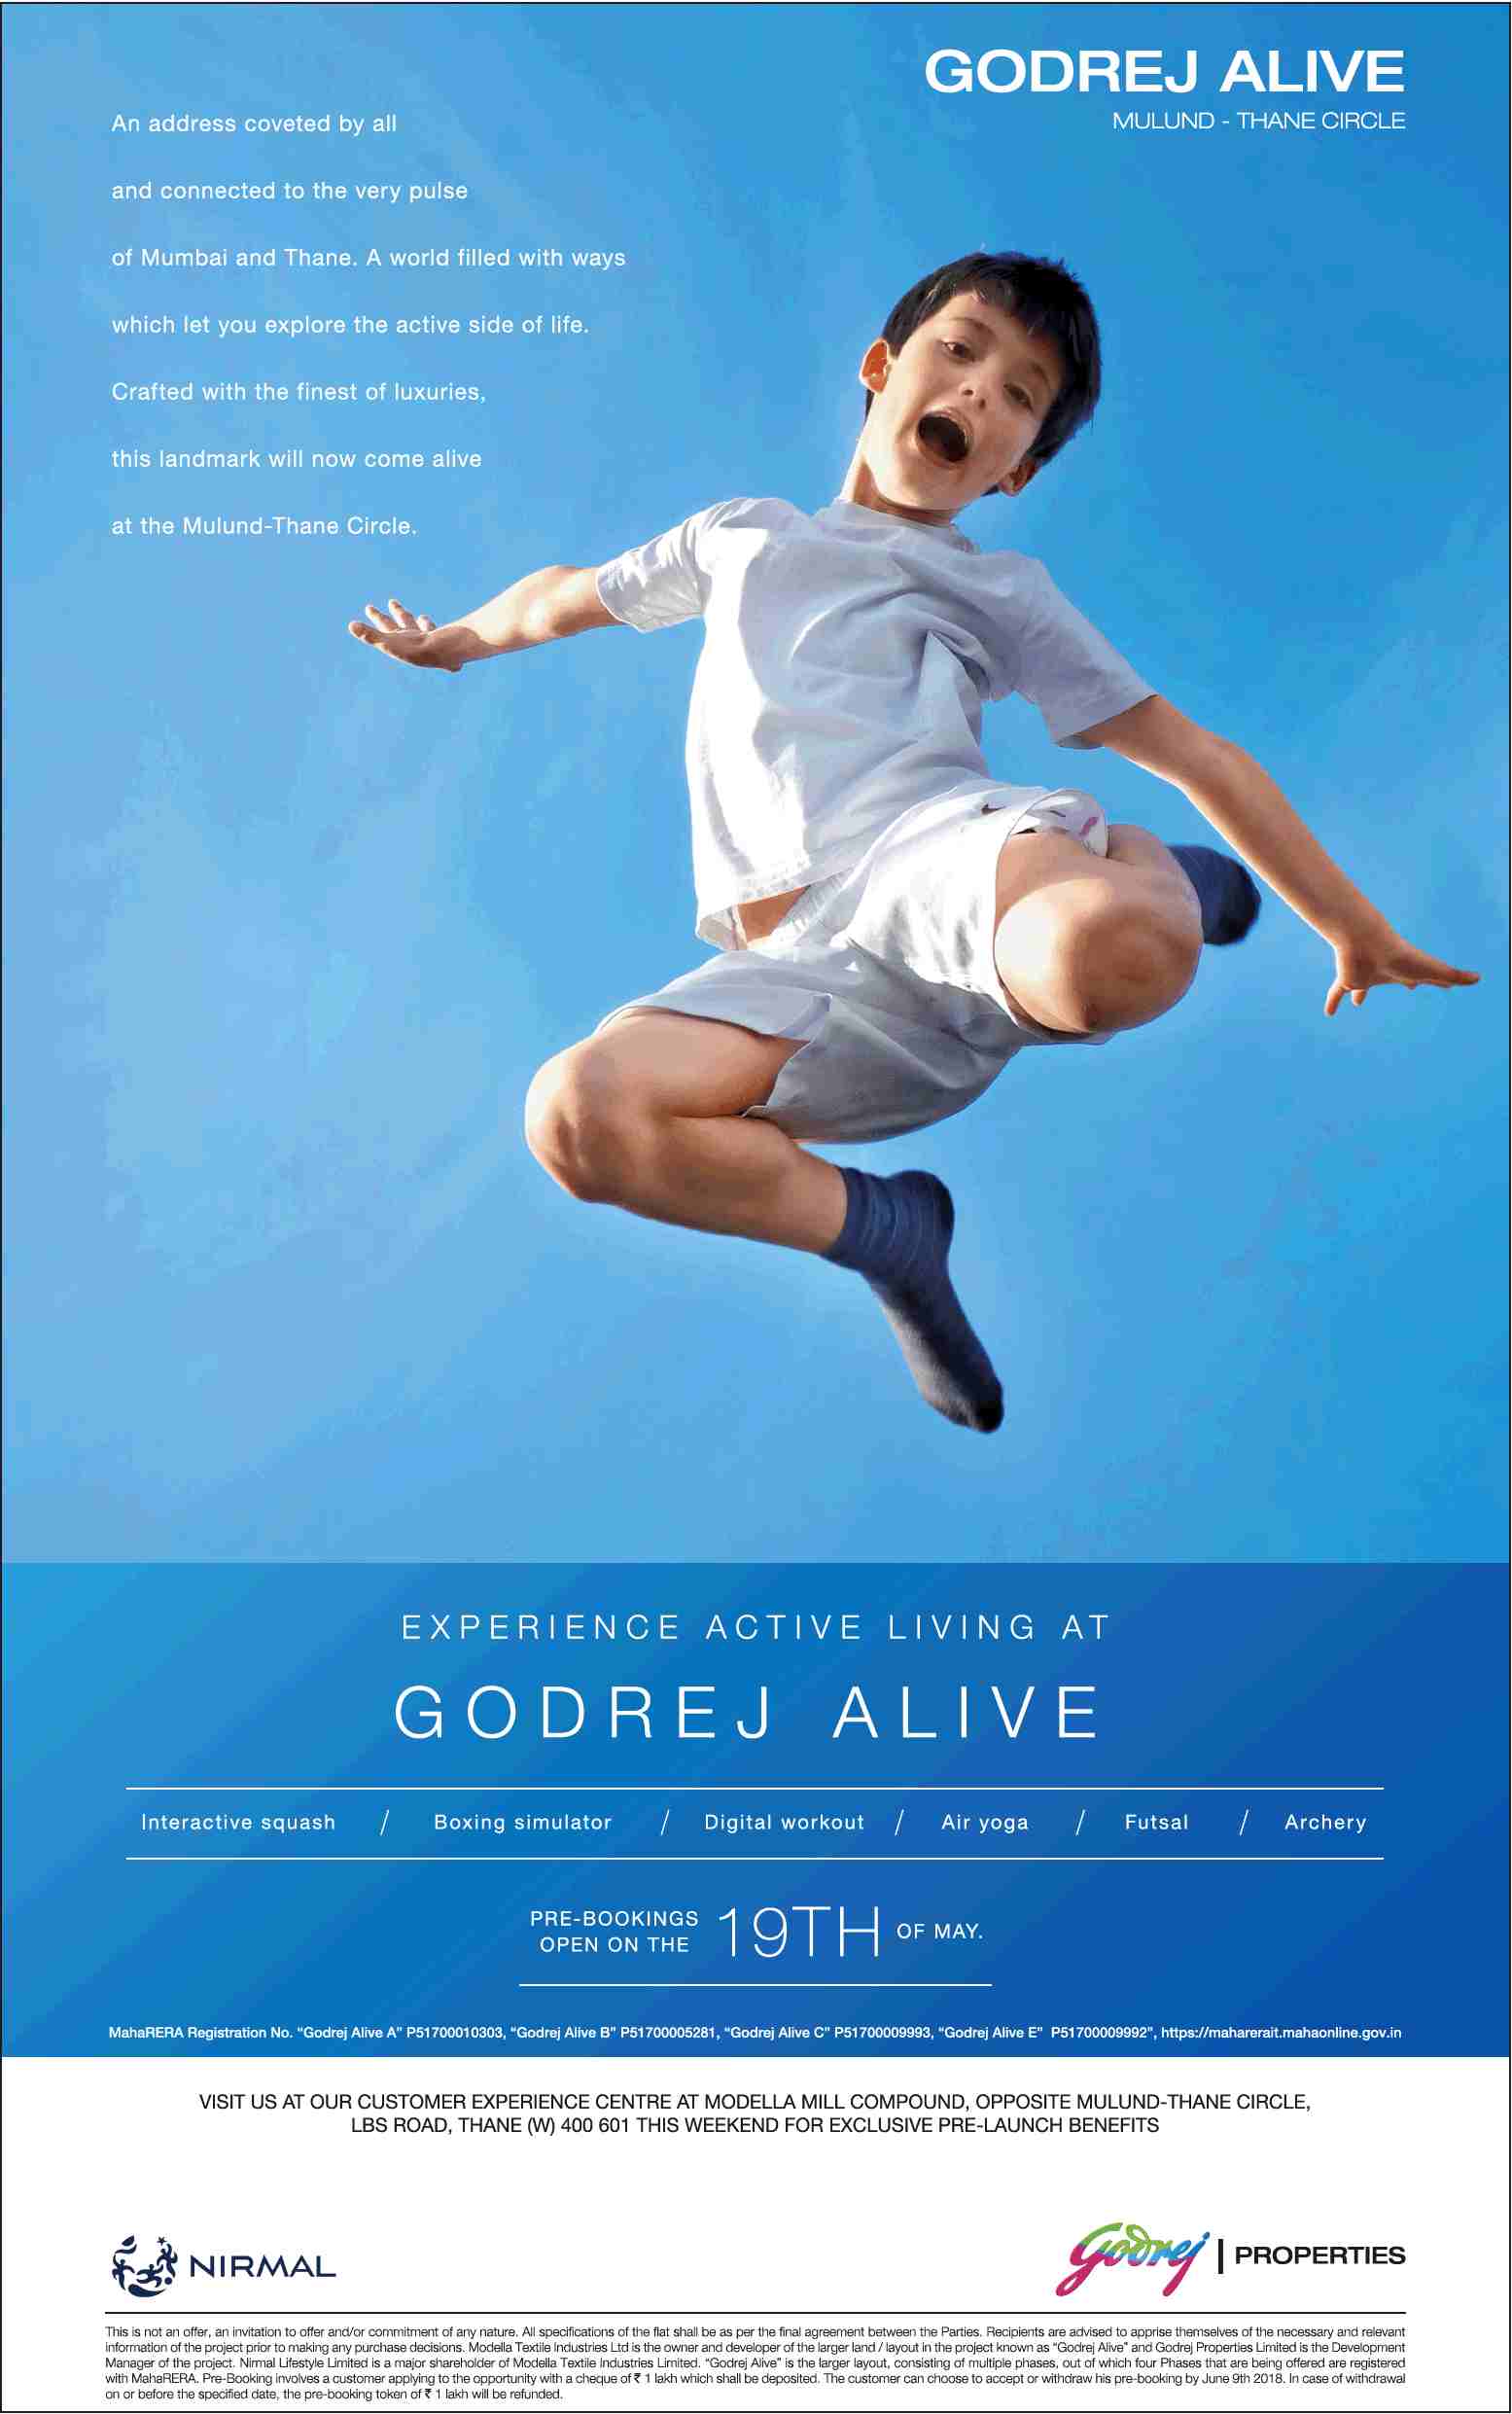 Experience active living at Godrej Alive in Mumbai